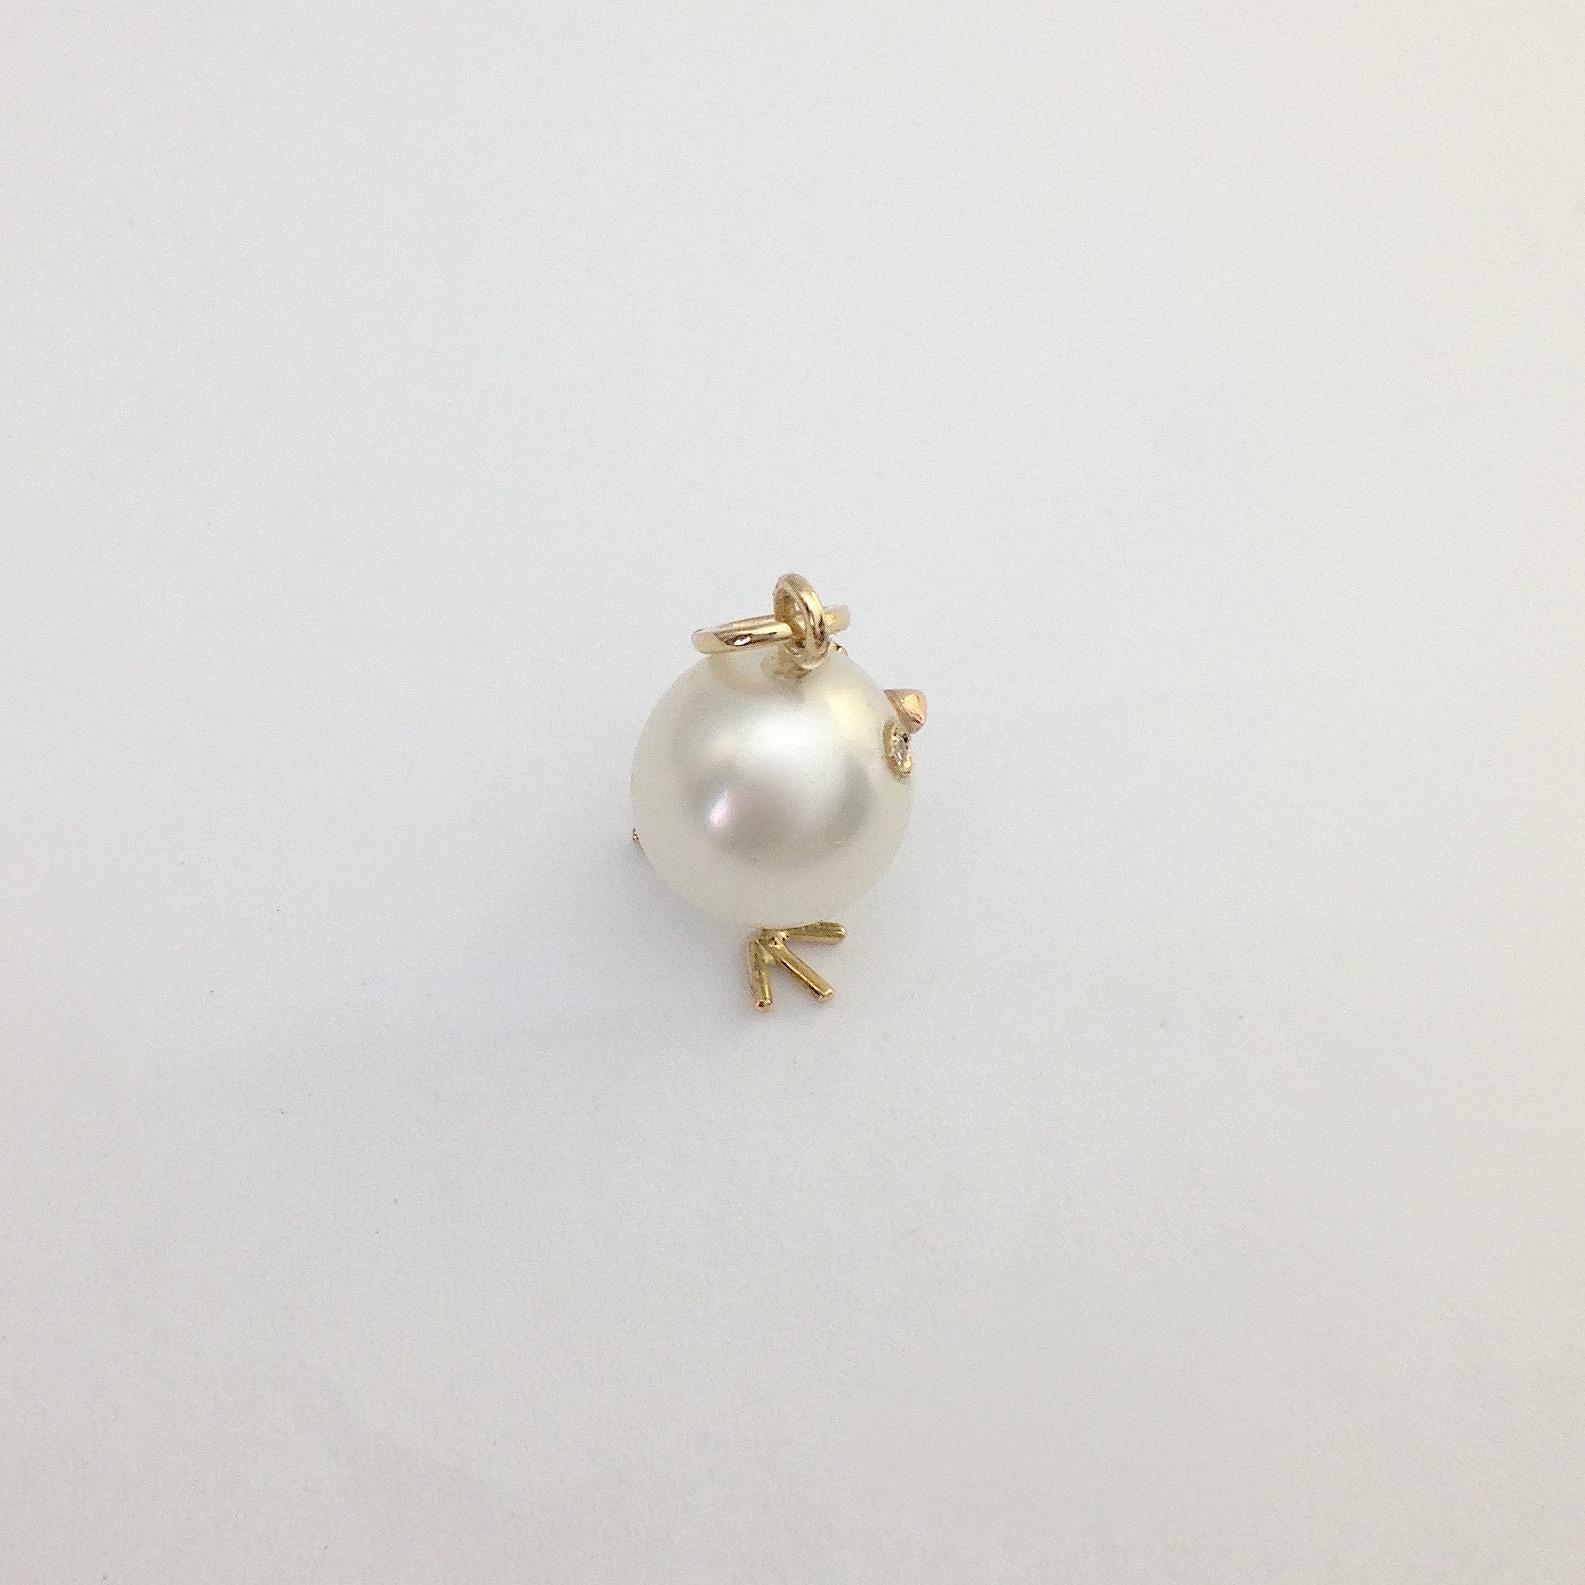 Petronilla Chick Australian Pearl White Diamond 18 Kt Gold Pendant Necklace 1